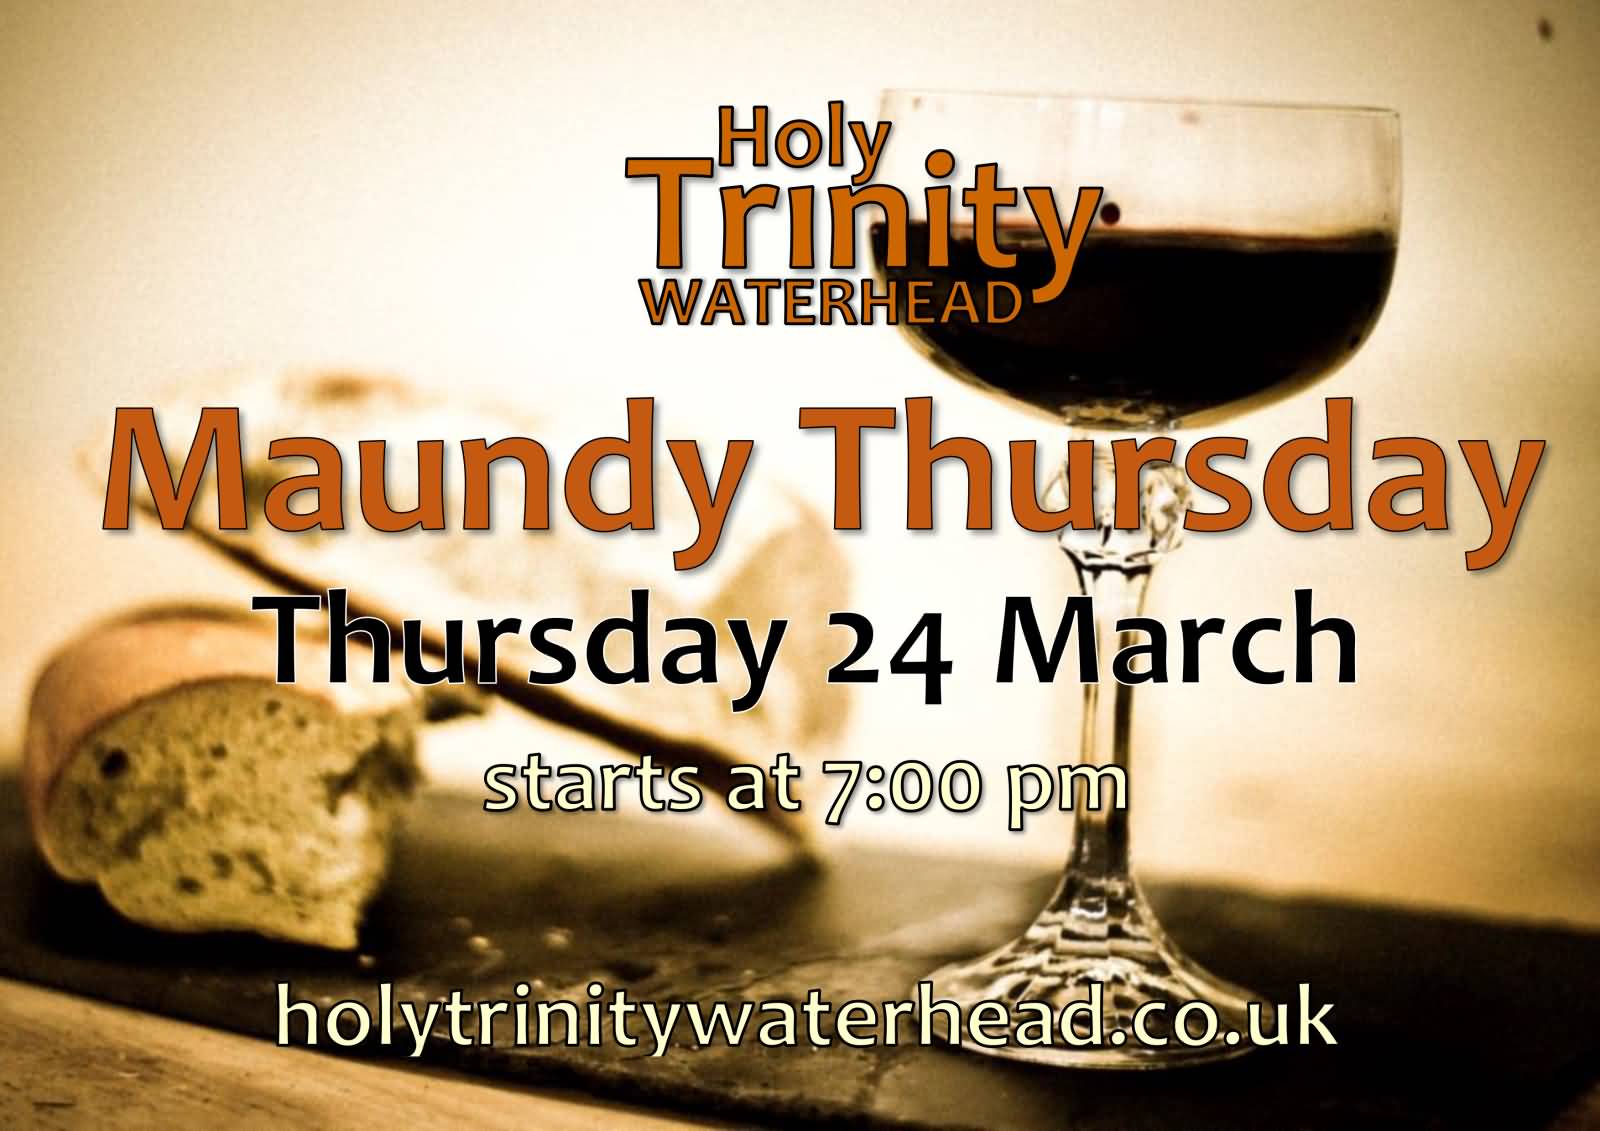 Holy Trinity Waterhead Maundy Thursday